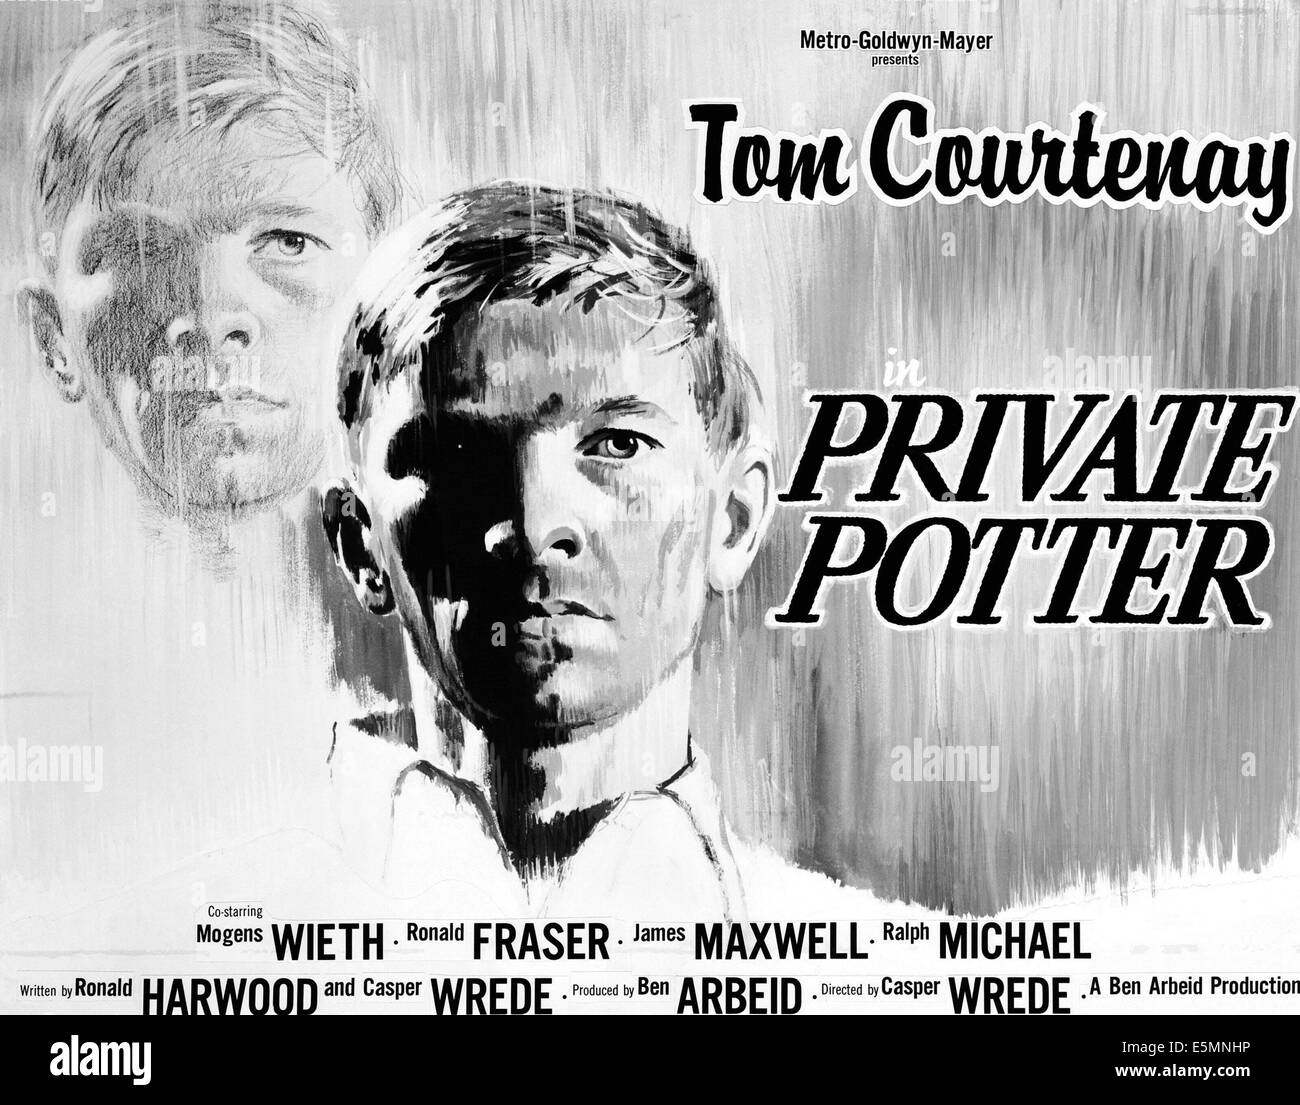 PRIVATE POTTER, Tom Courtenay, 1962 Stockfoto